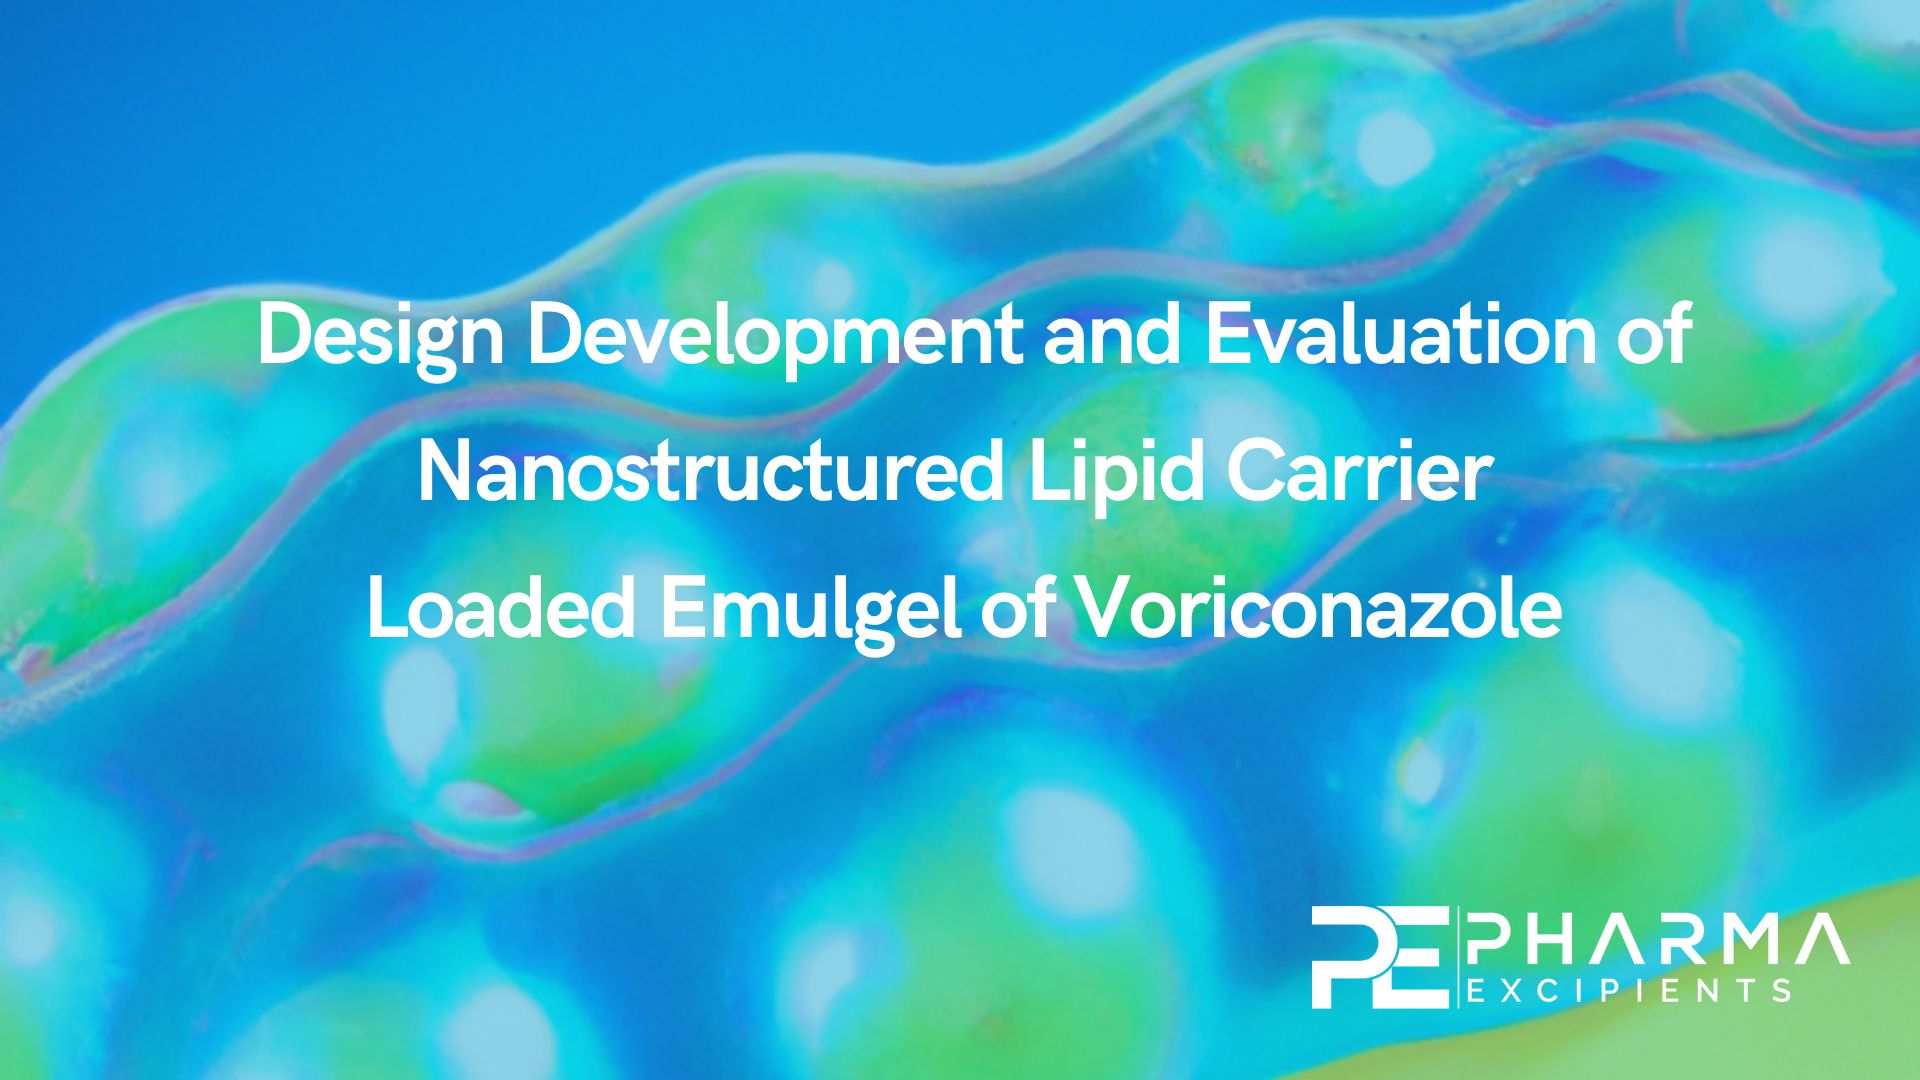 Design Development and Evaluation of Nanostructured Lipid Carrier Loaded Emulgel of Voriconazole